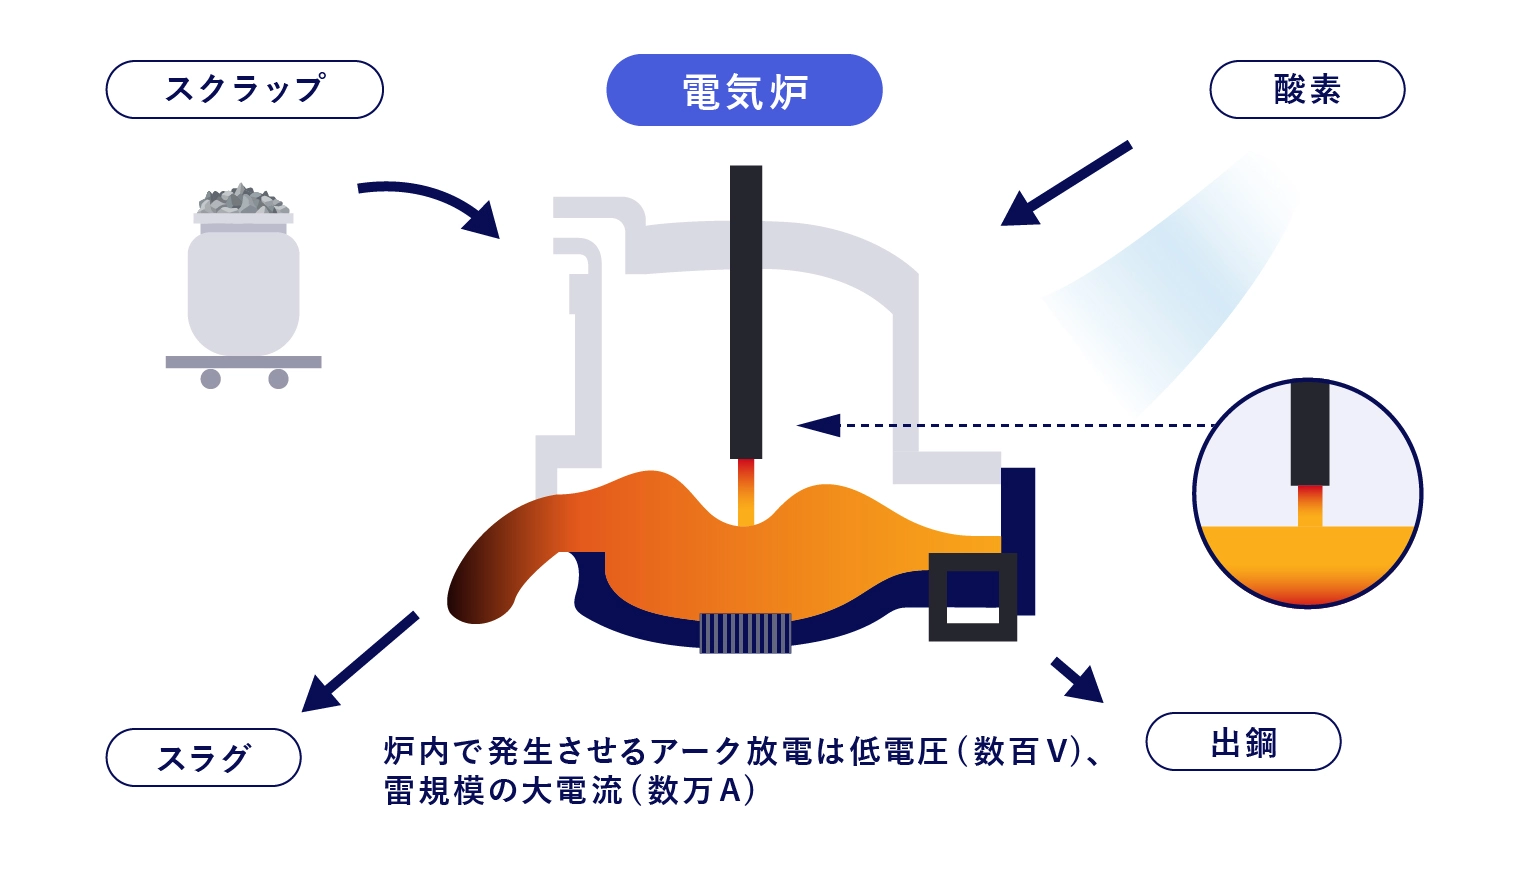 図:電気炉の図解